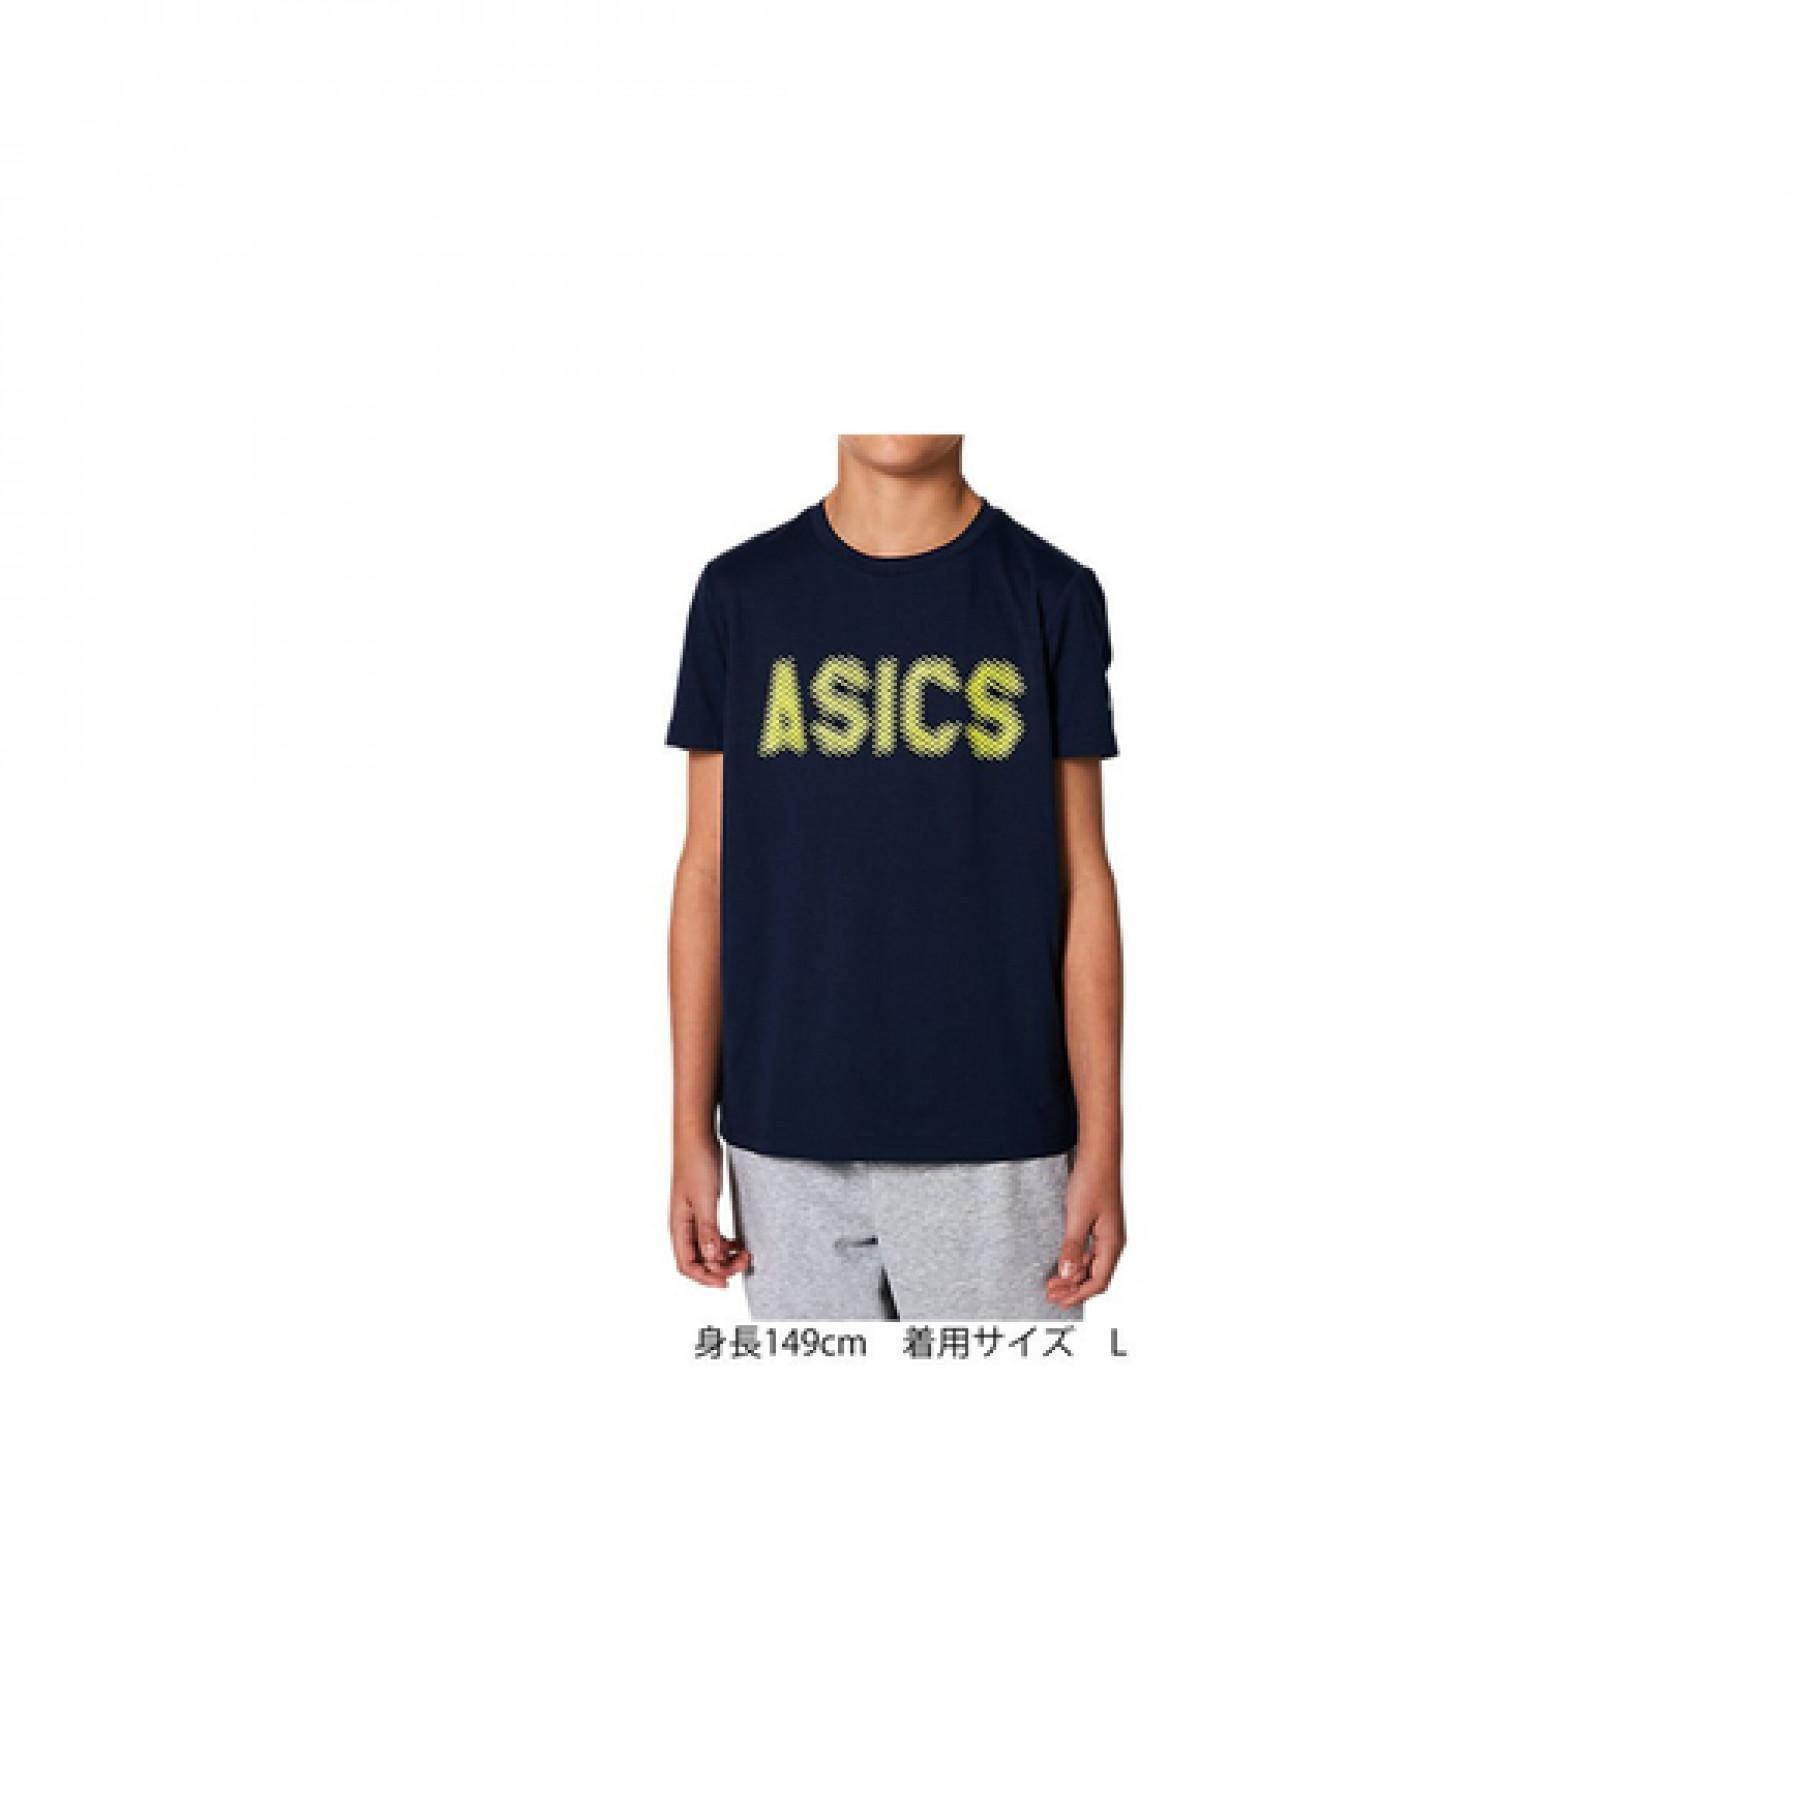 Koszulka dziecięca Asics Gpxt